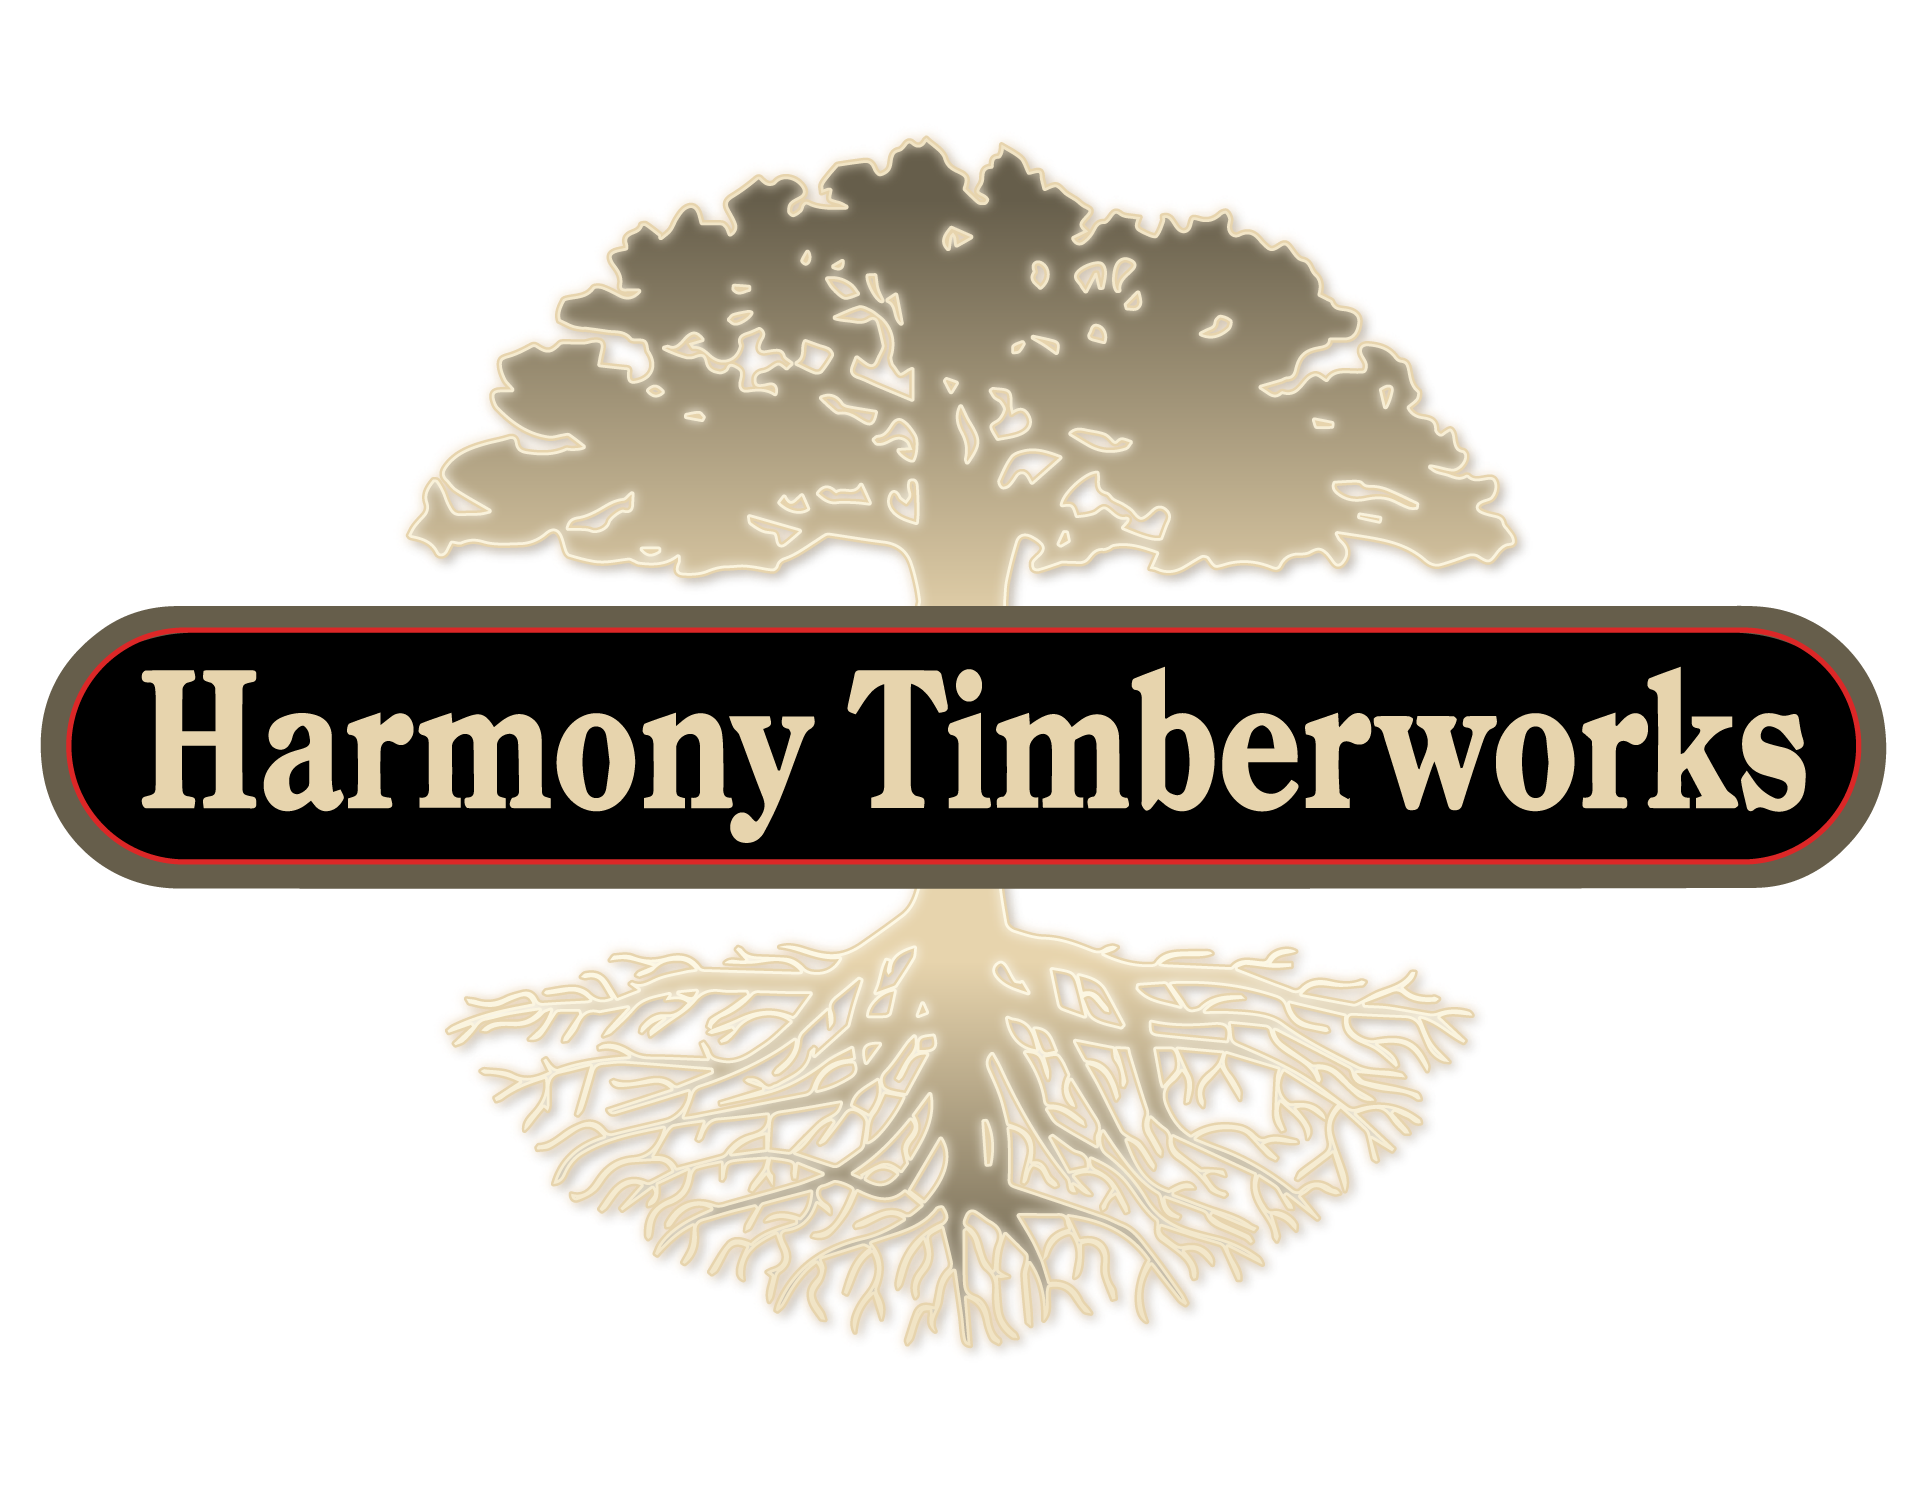 Harmony Timberworks full color logo